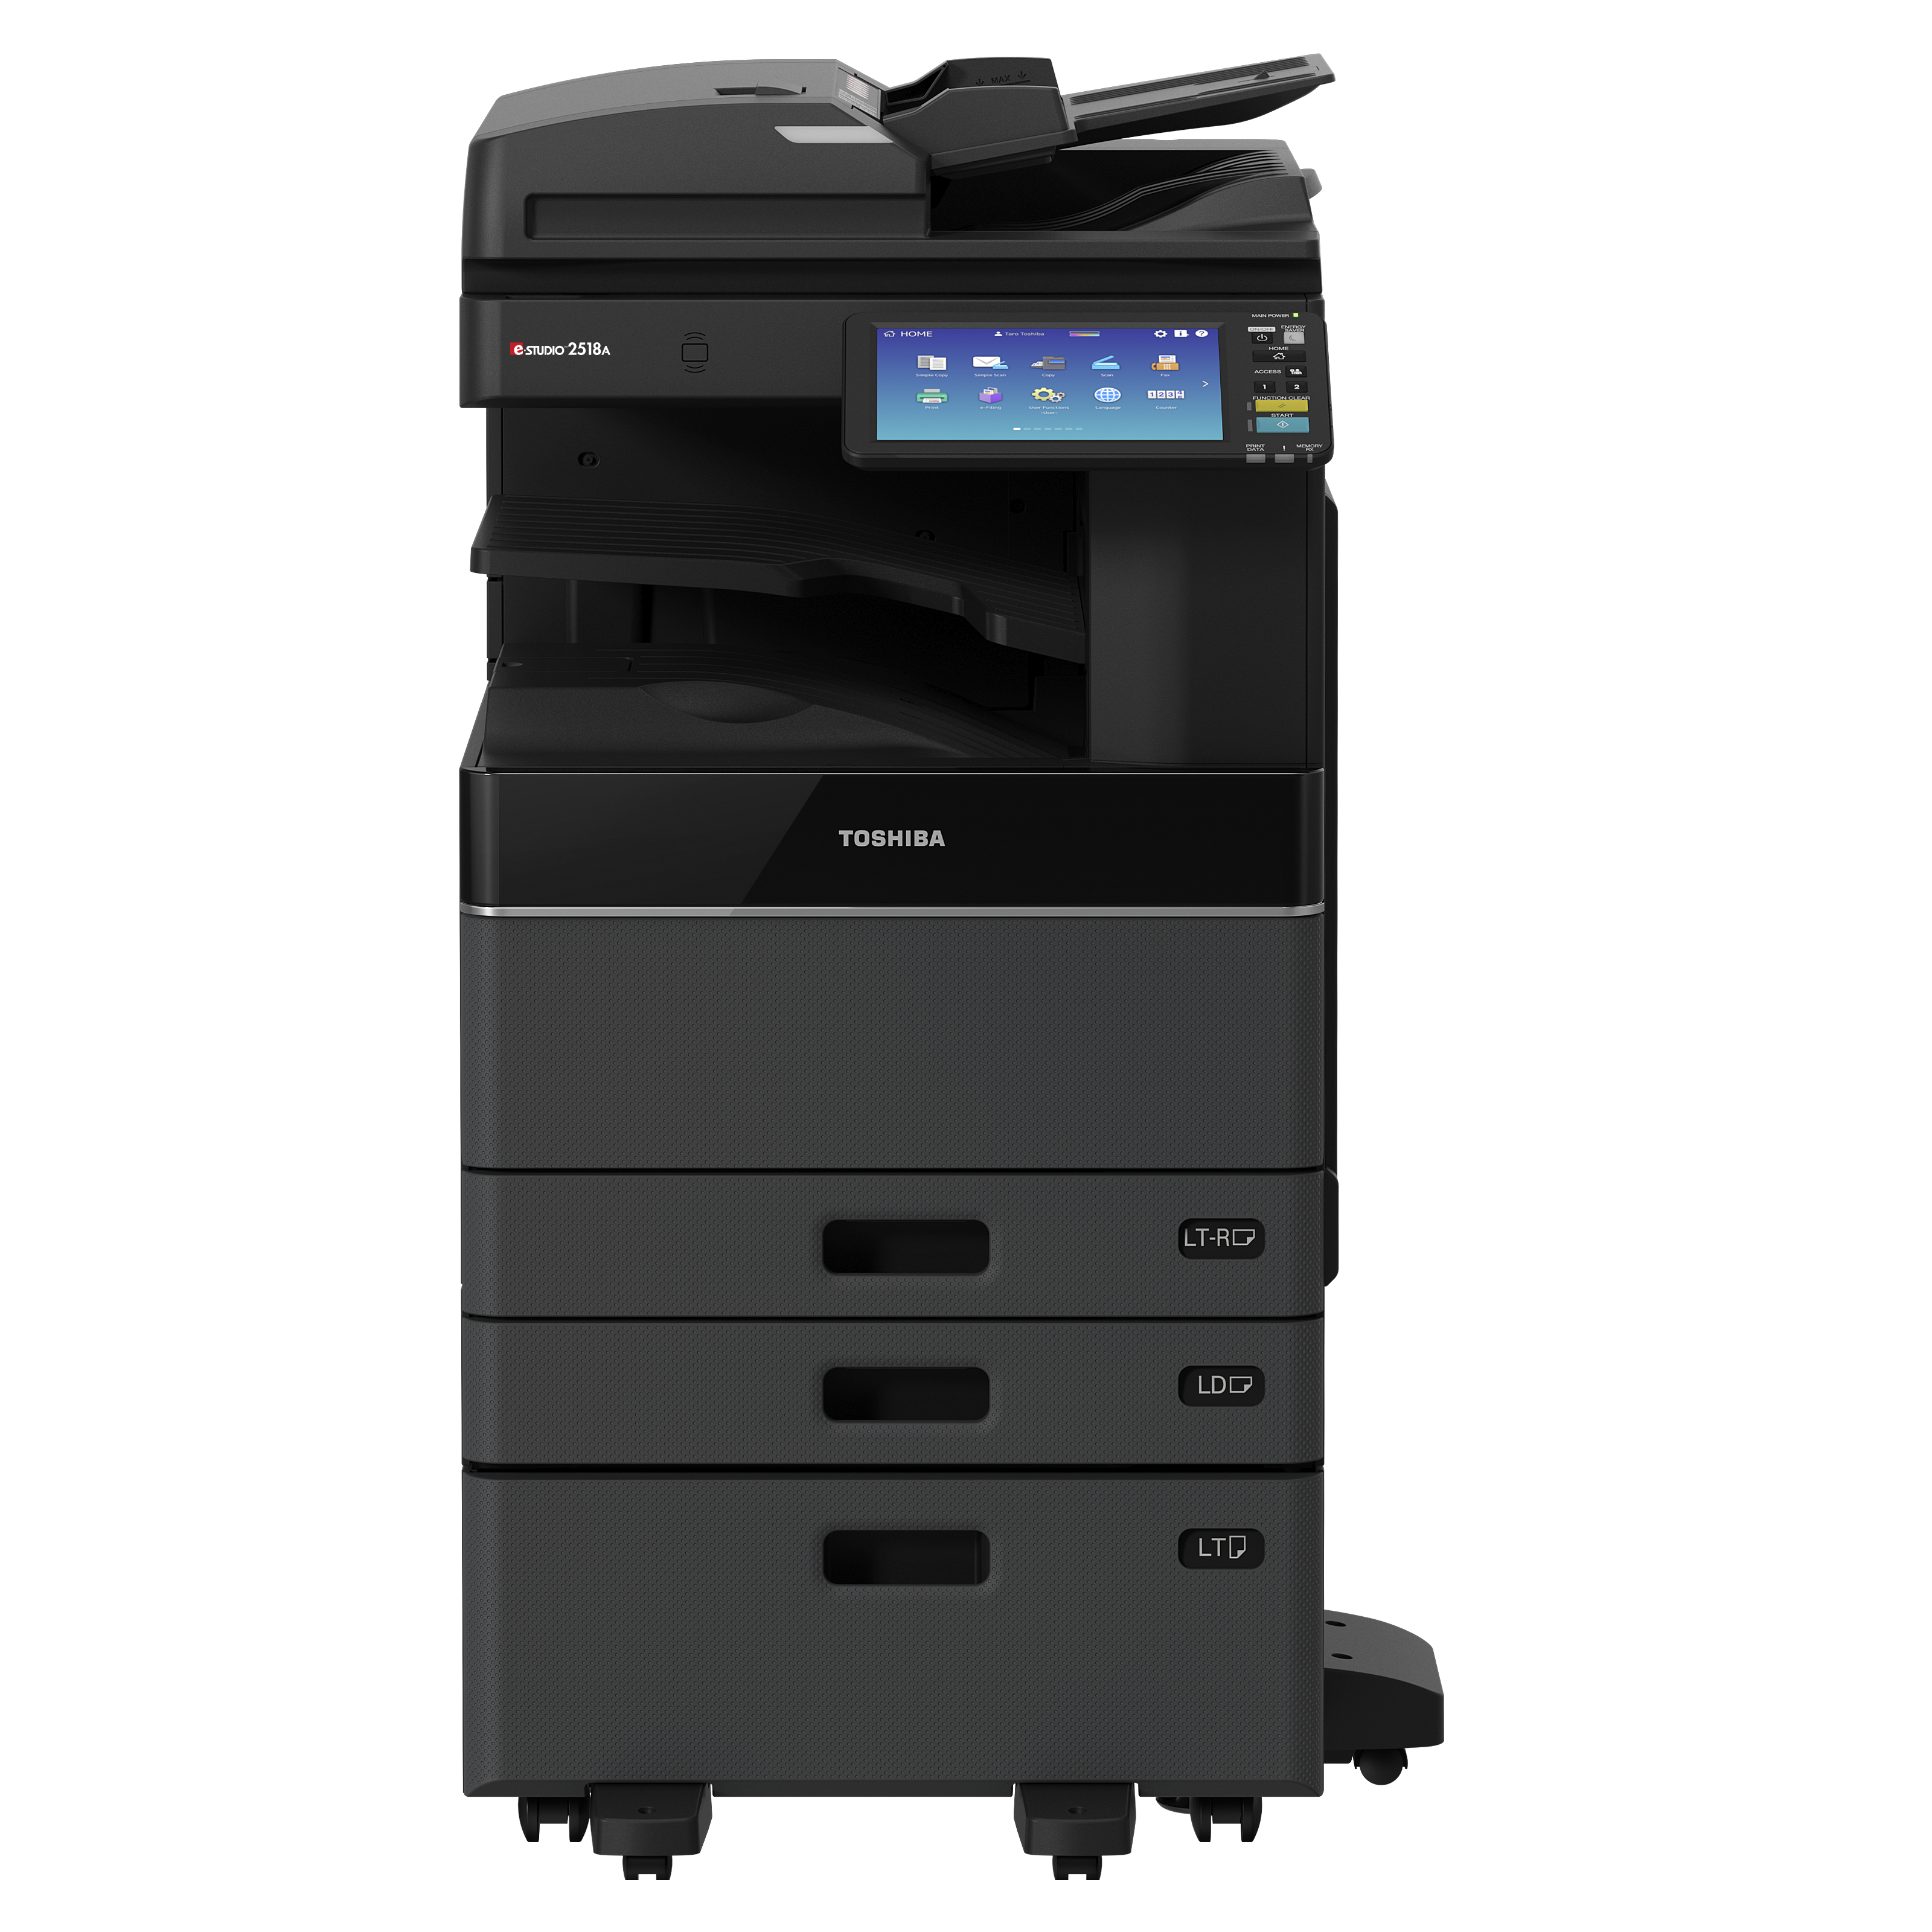 Toshiba E-Studio 2518A Monochrome Multifunction High Volume Printer Copier Scanner For Office Use